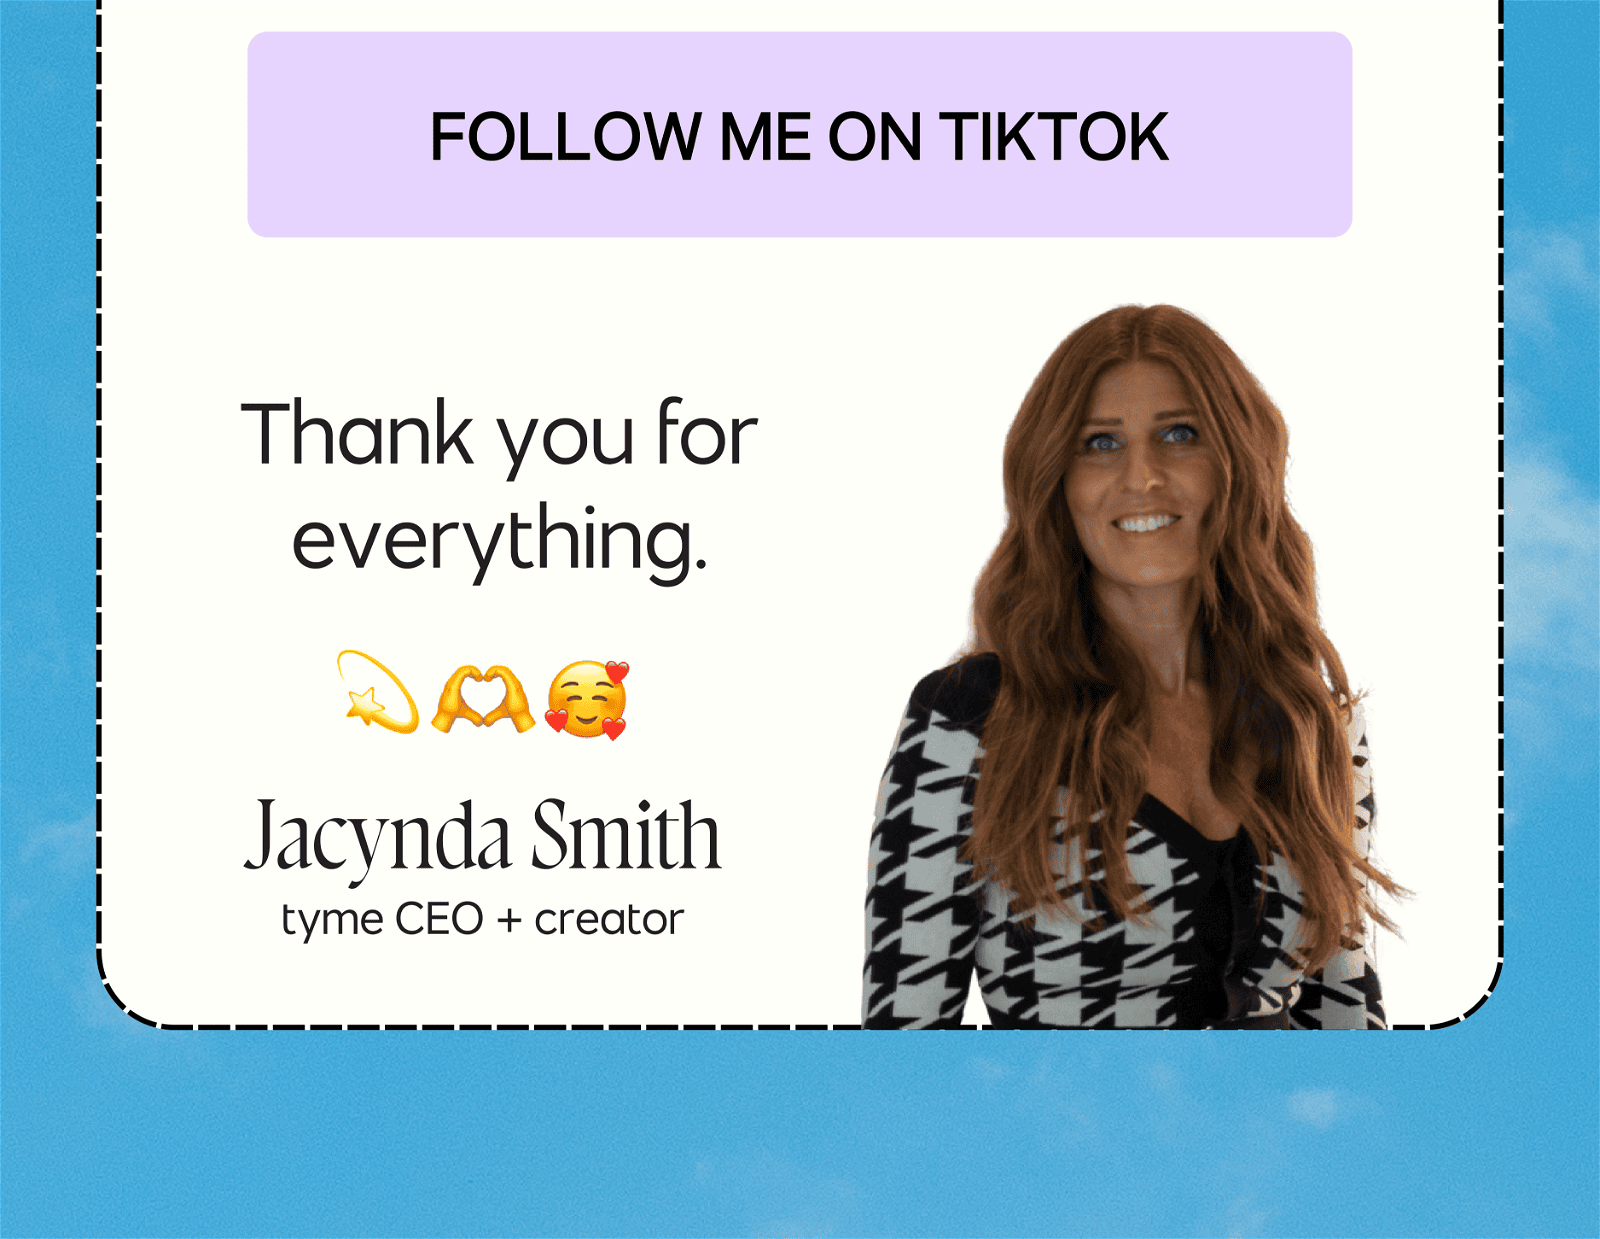 Follow Jacynda on Tiktok